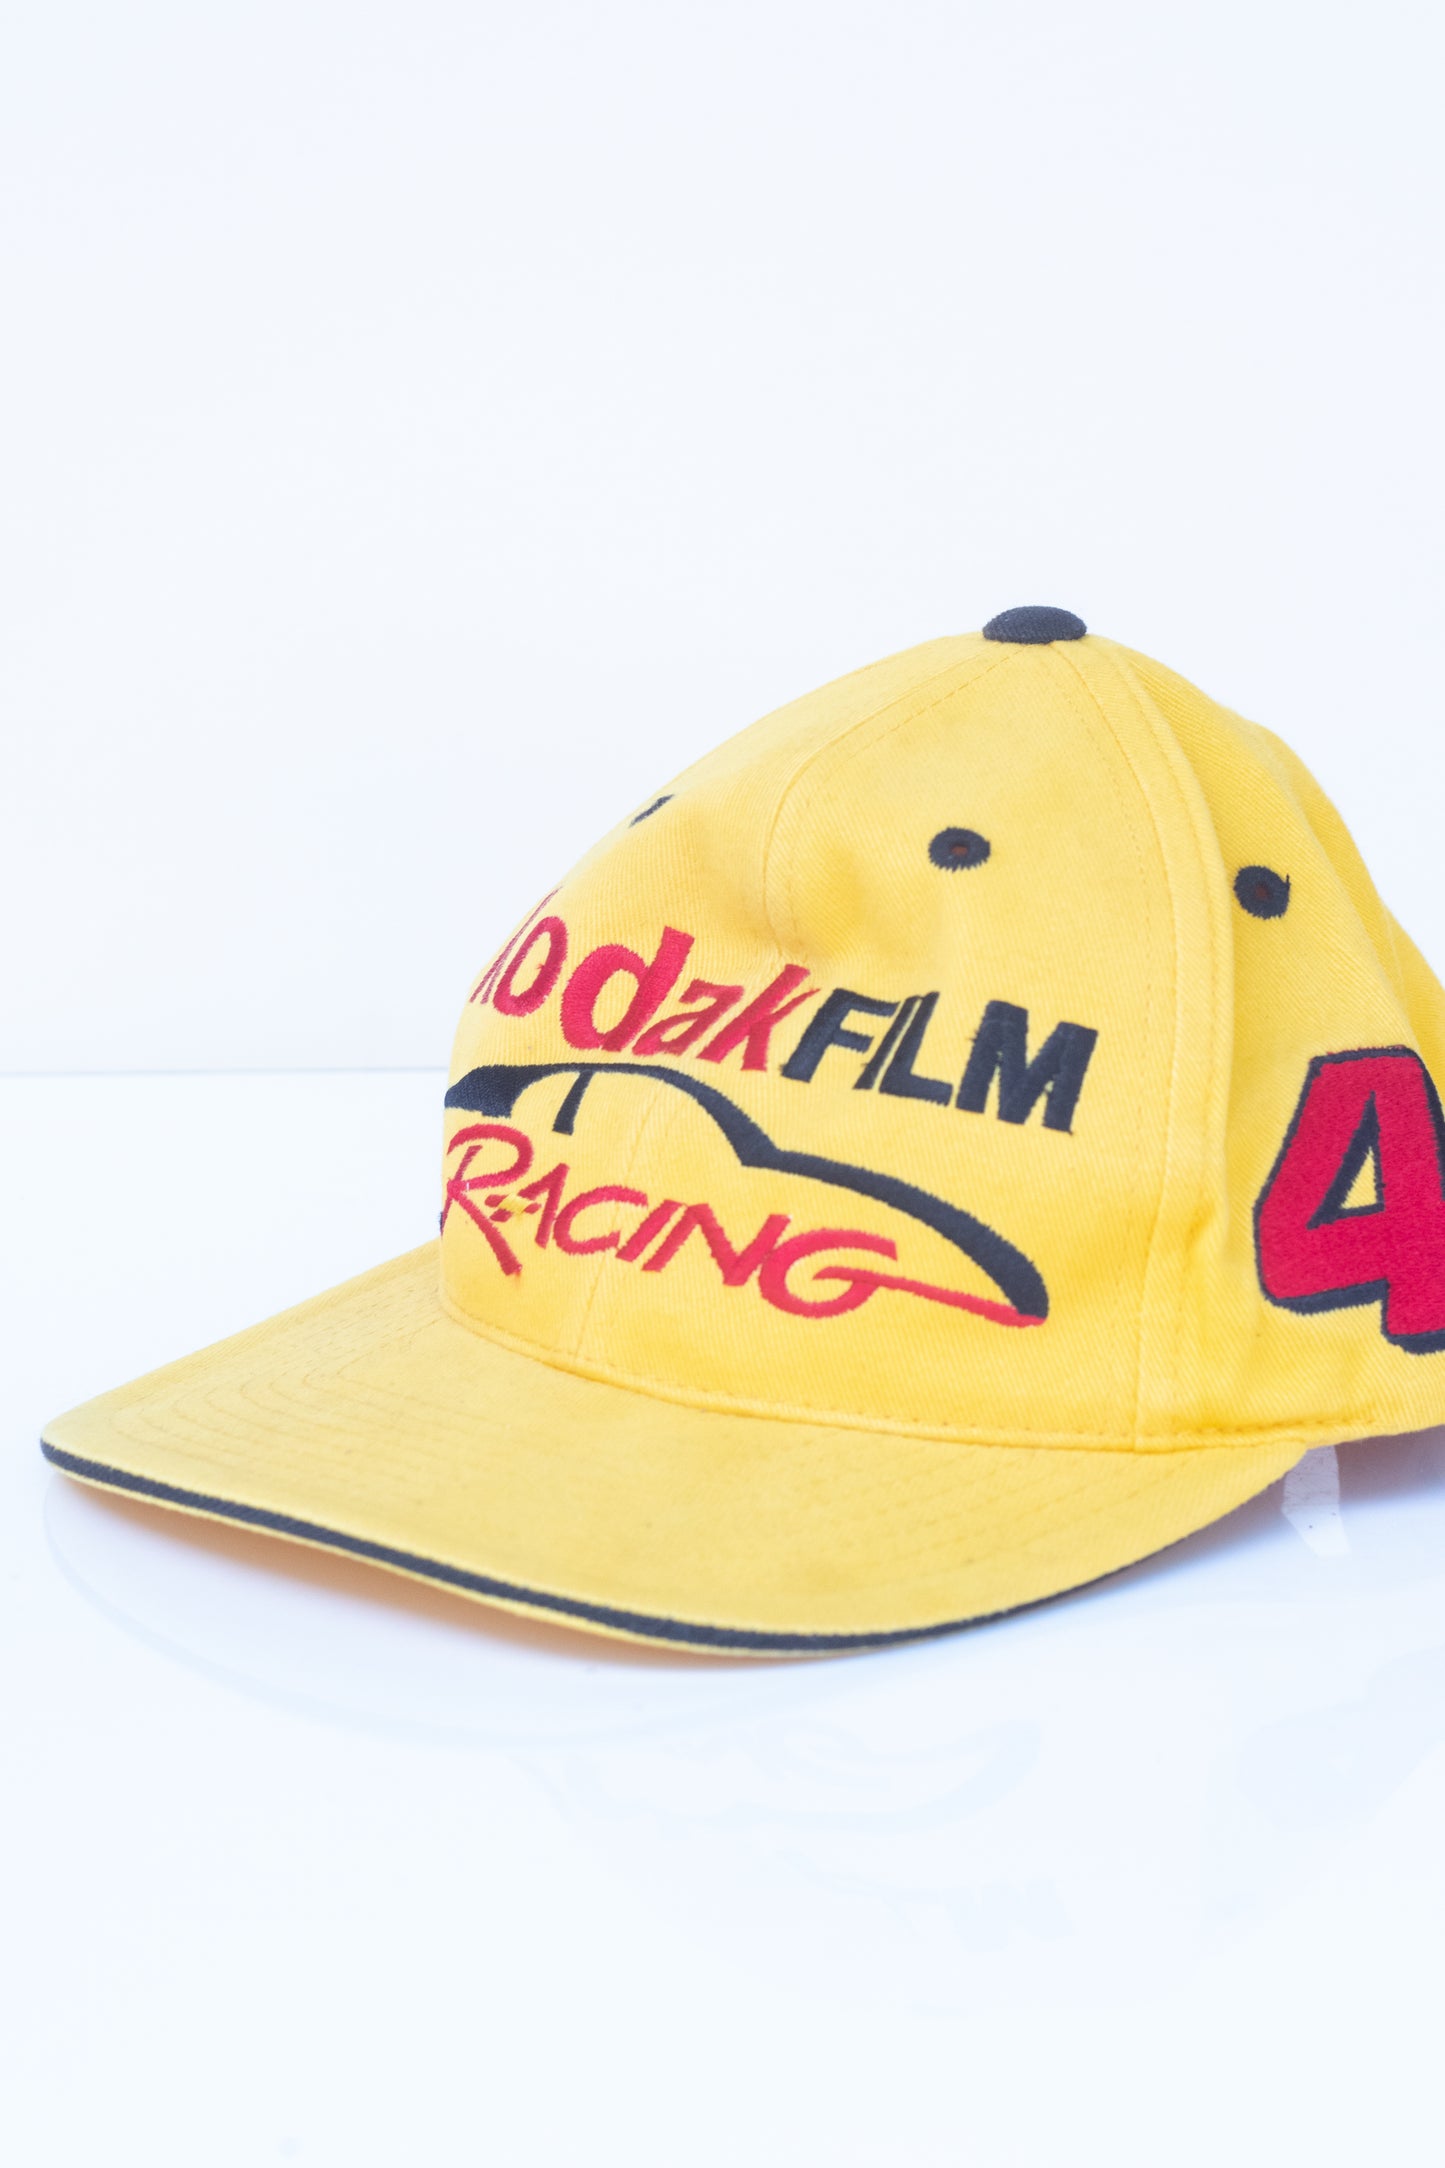 Vintage Nascar Kodak Film Racing Baseball Cap | Yellow Great Condition